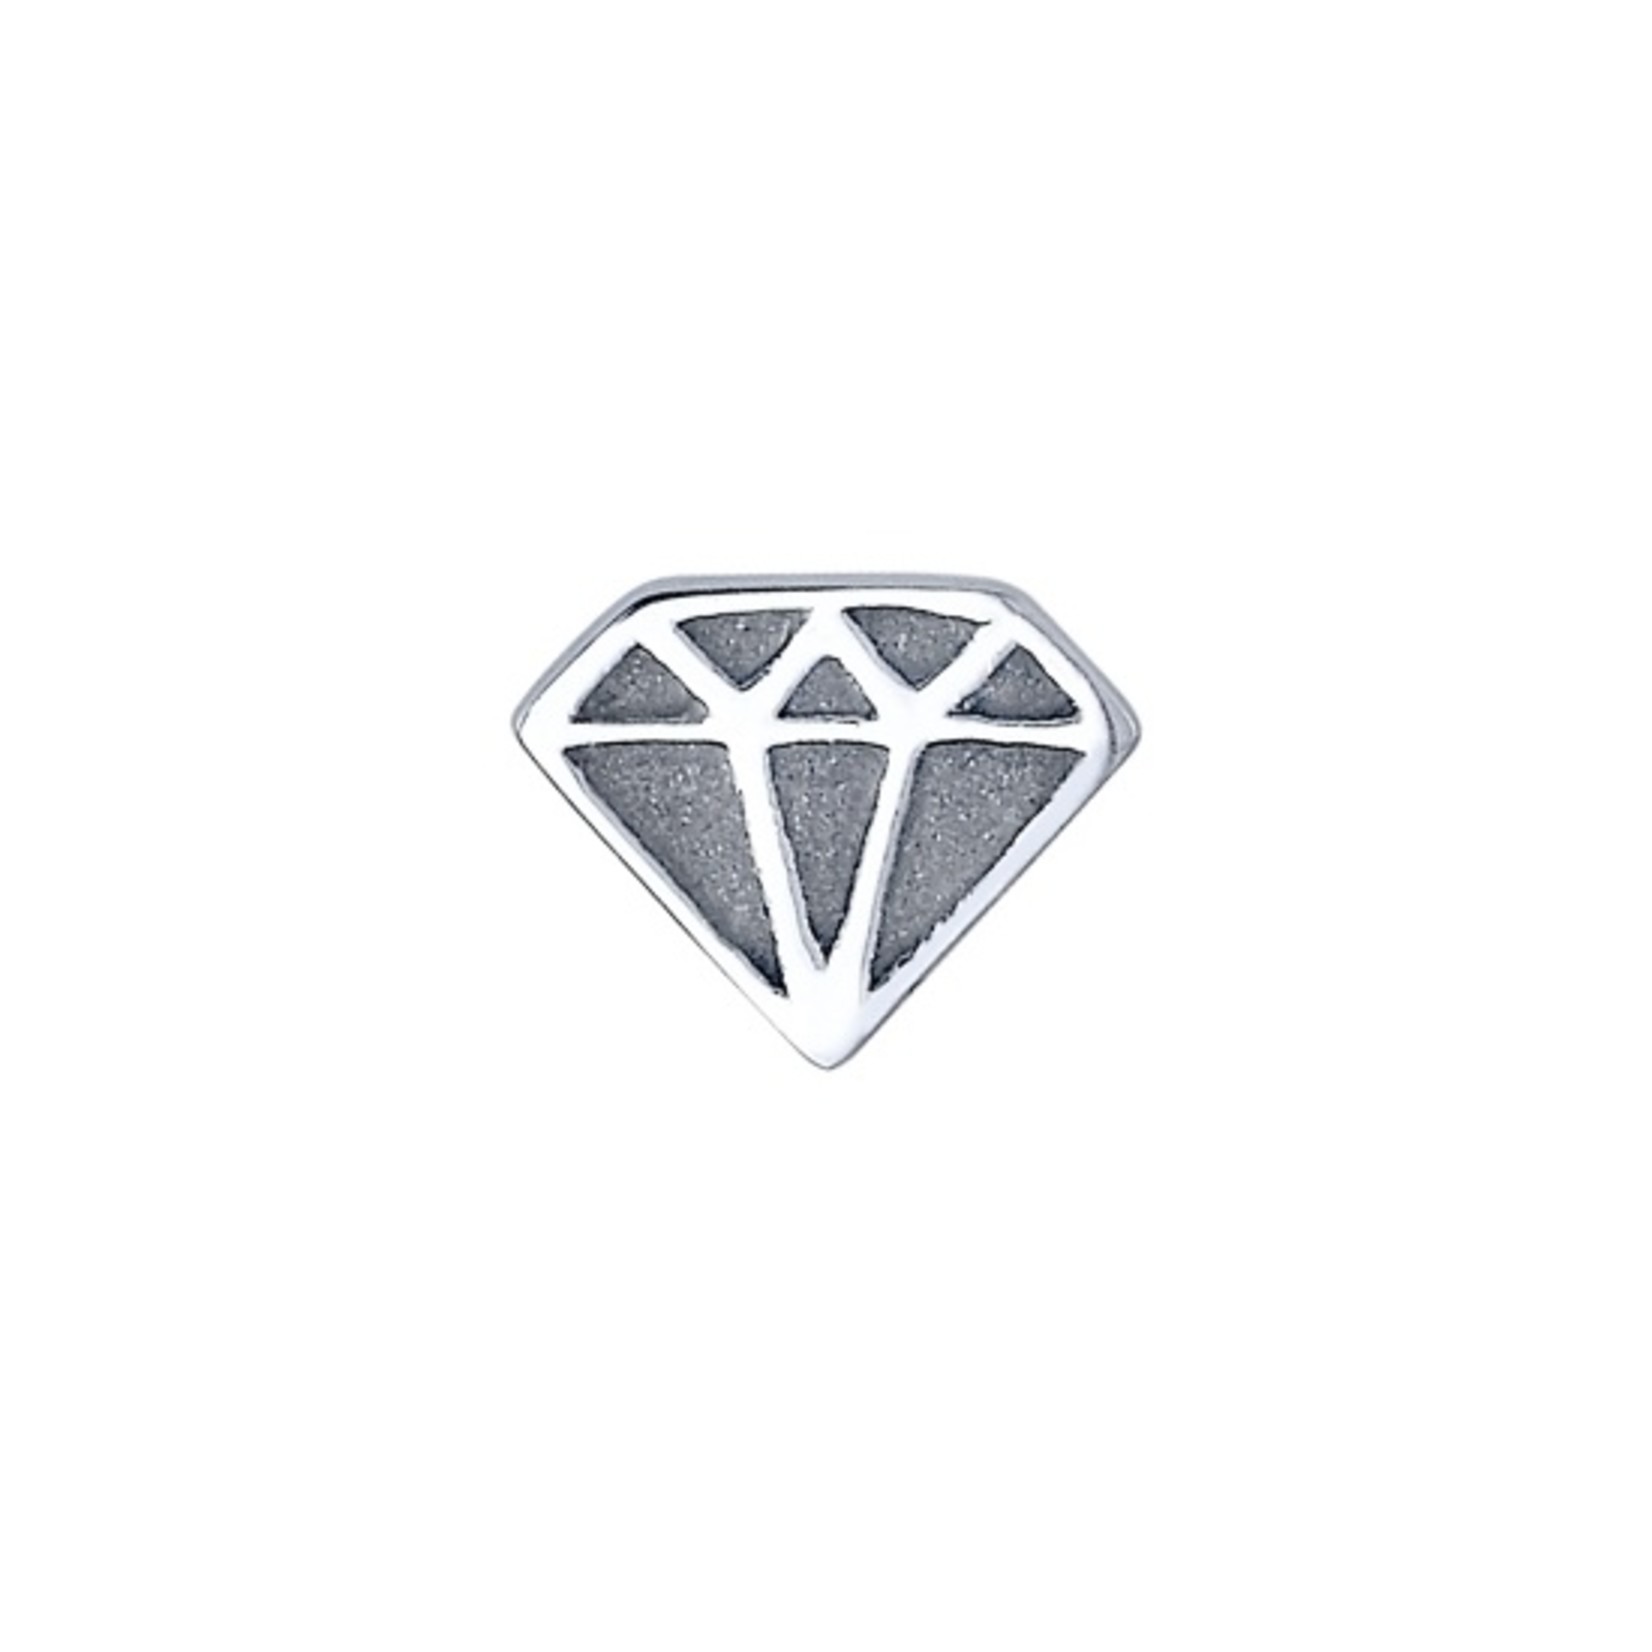 BVLA BVLA 14g 6.0 "Diamond Profile" threaded end with sandblasted hollows